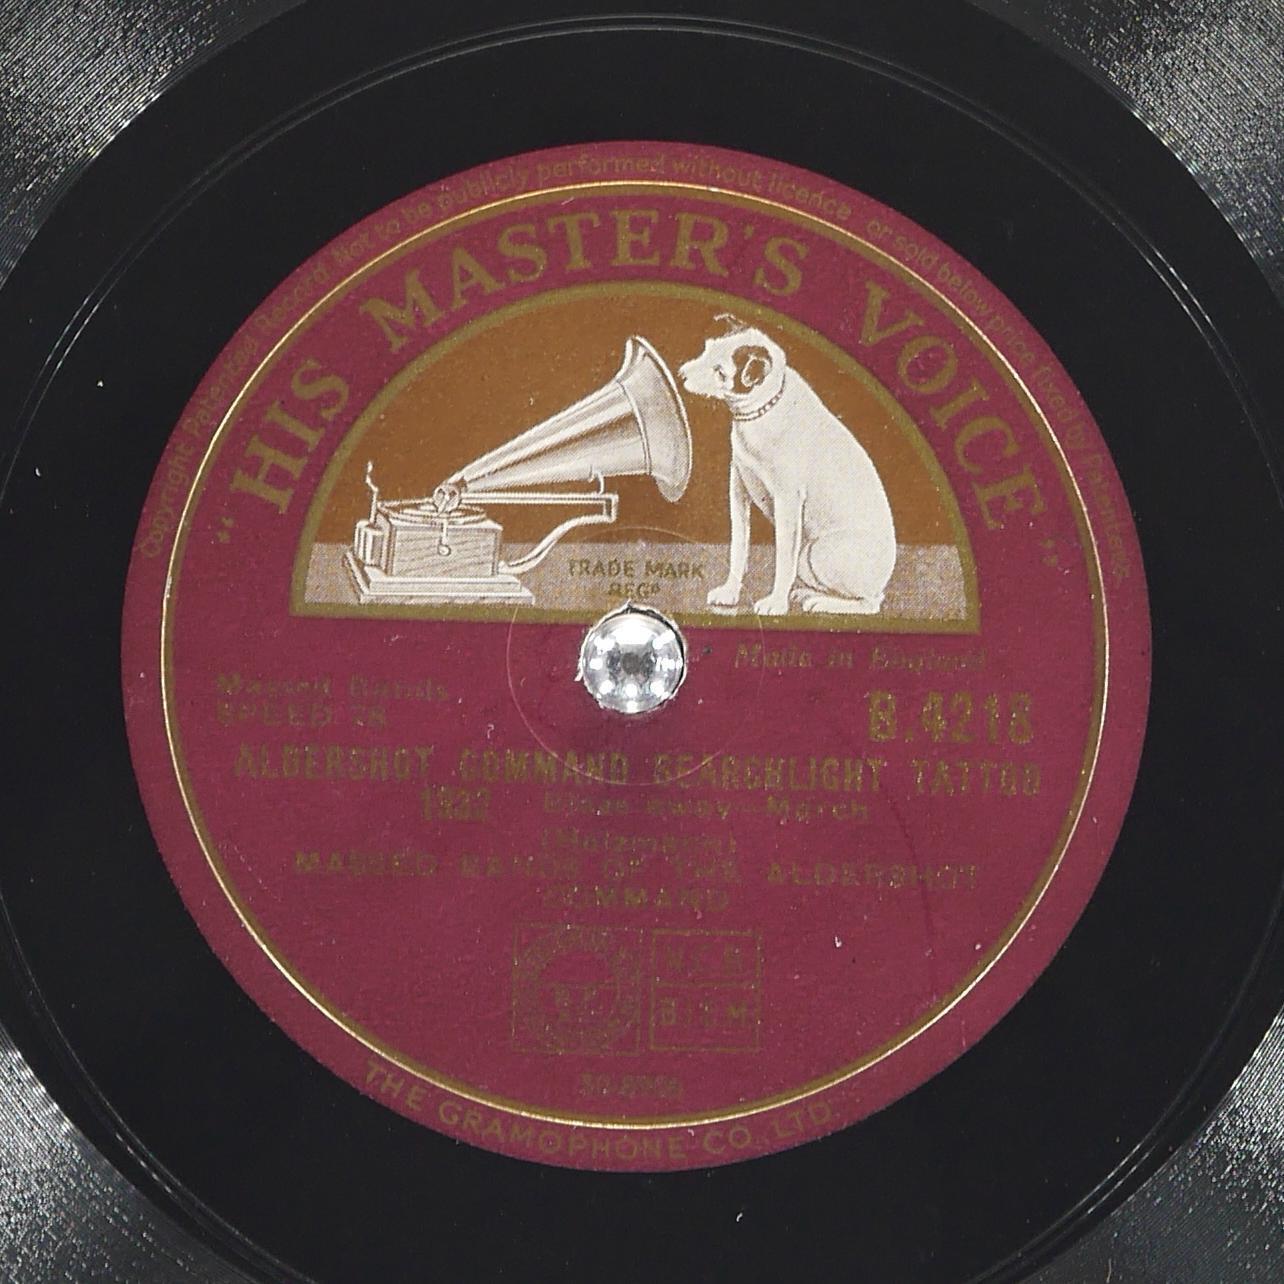 MASSED BANDS OF THE ALDERSHOT COMMAND Searchlight Tattoo 1932 HMV B.4218 EX+ 78